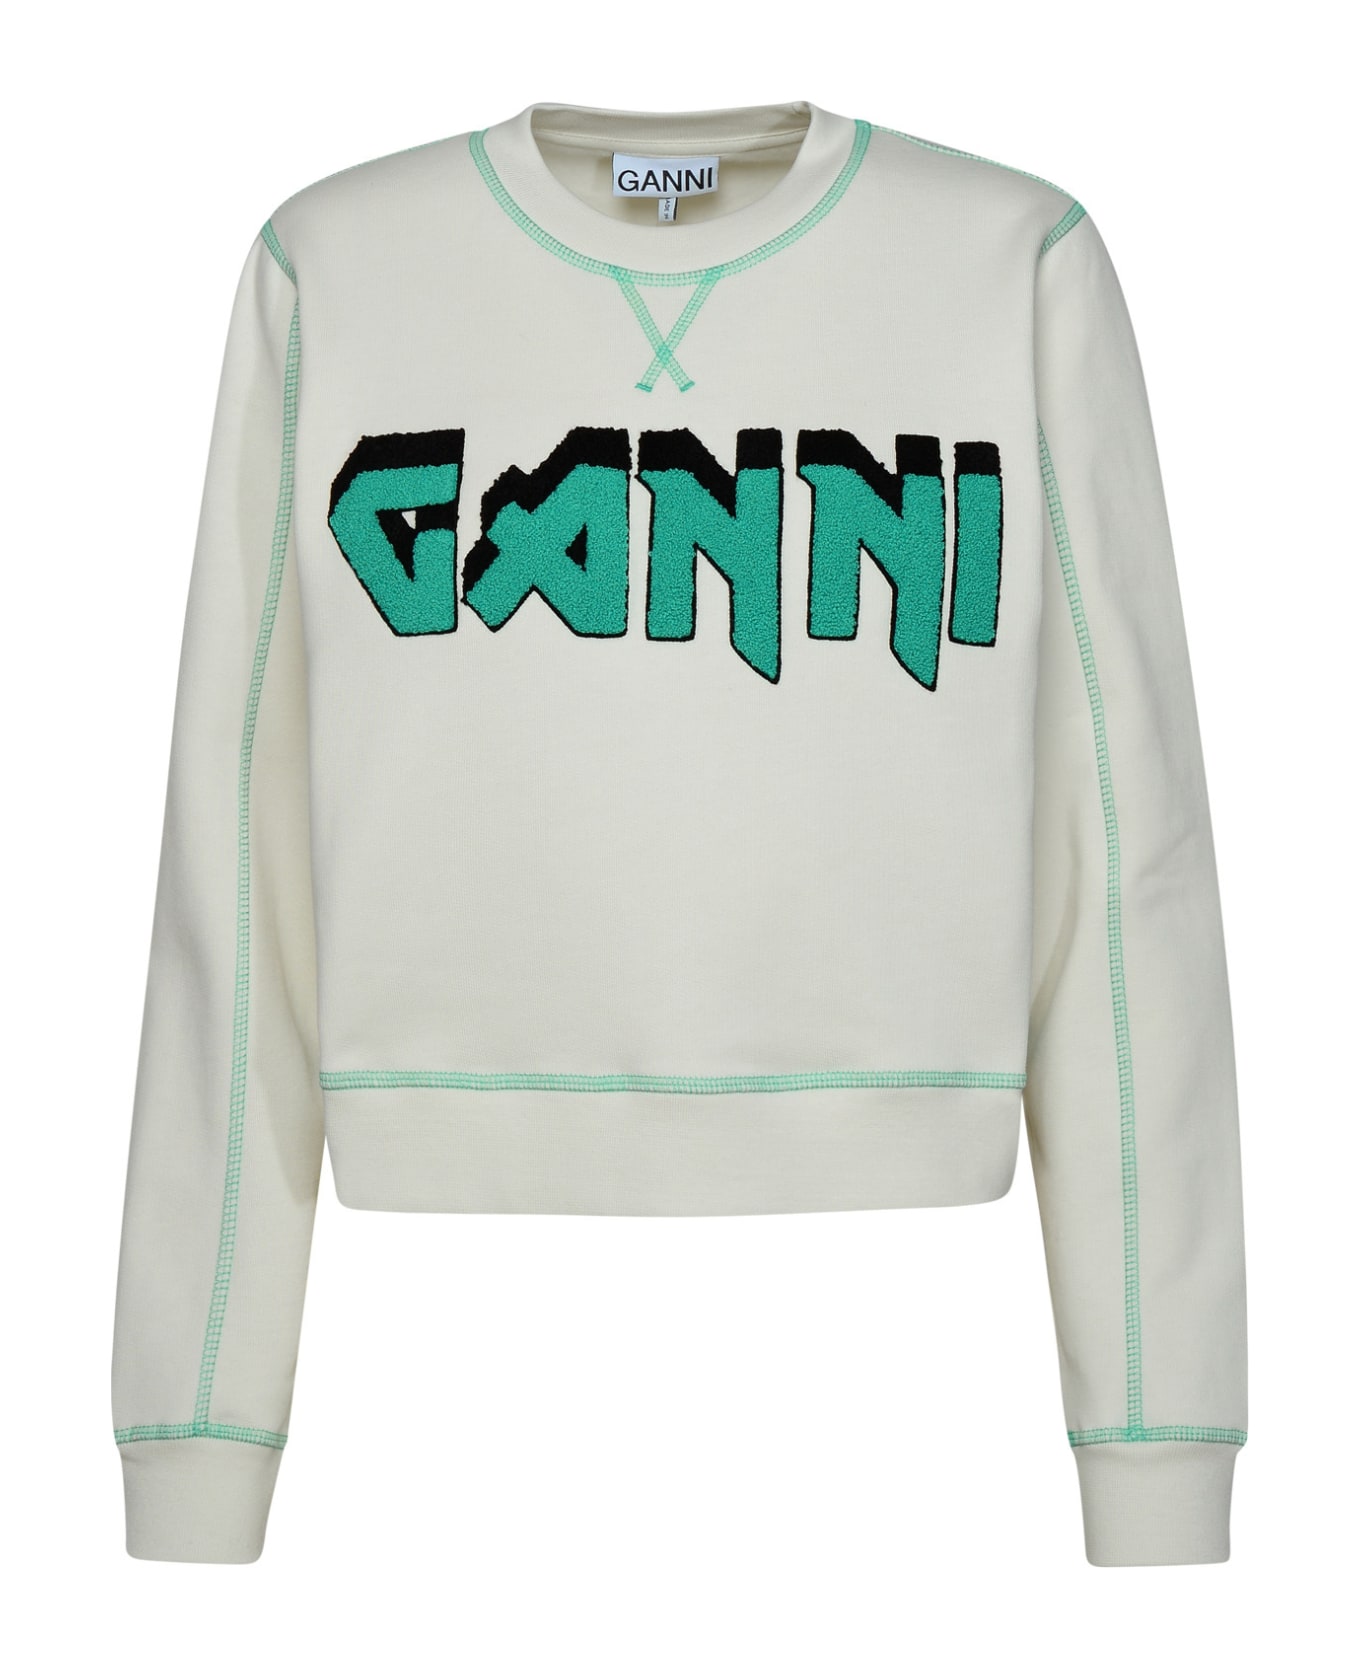 Ganni 'isoli Rock' Bio Ivory Cotton Sweatshirt - Ivory フリース